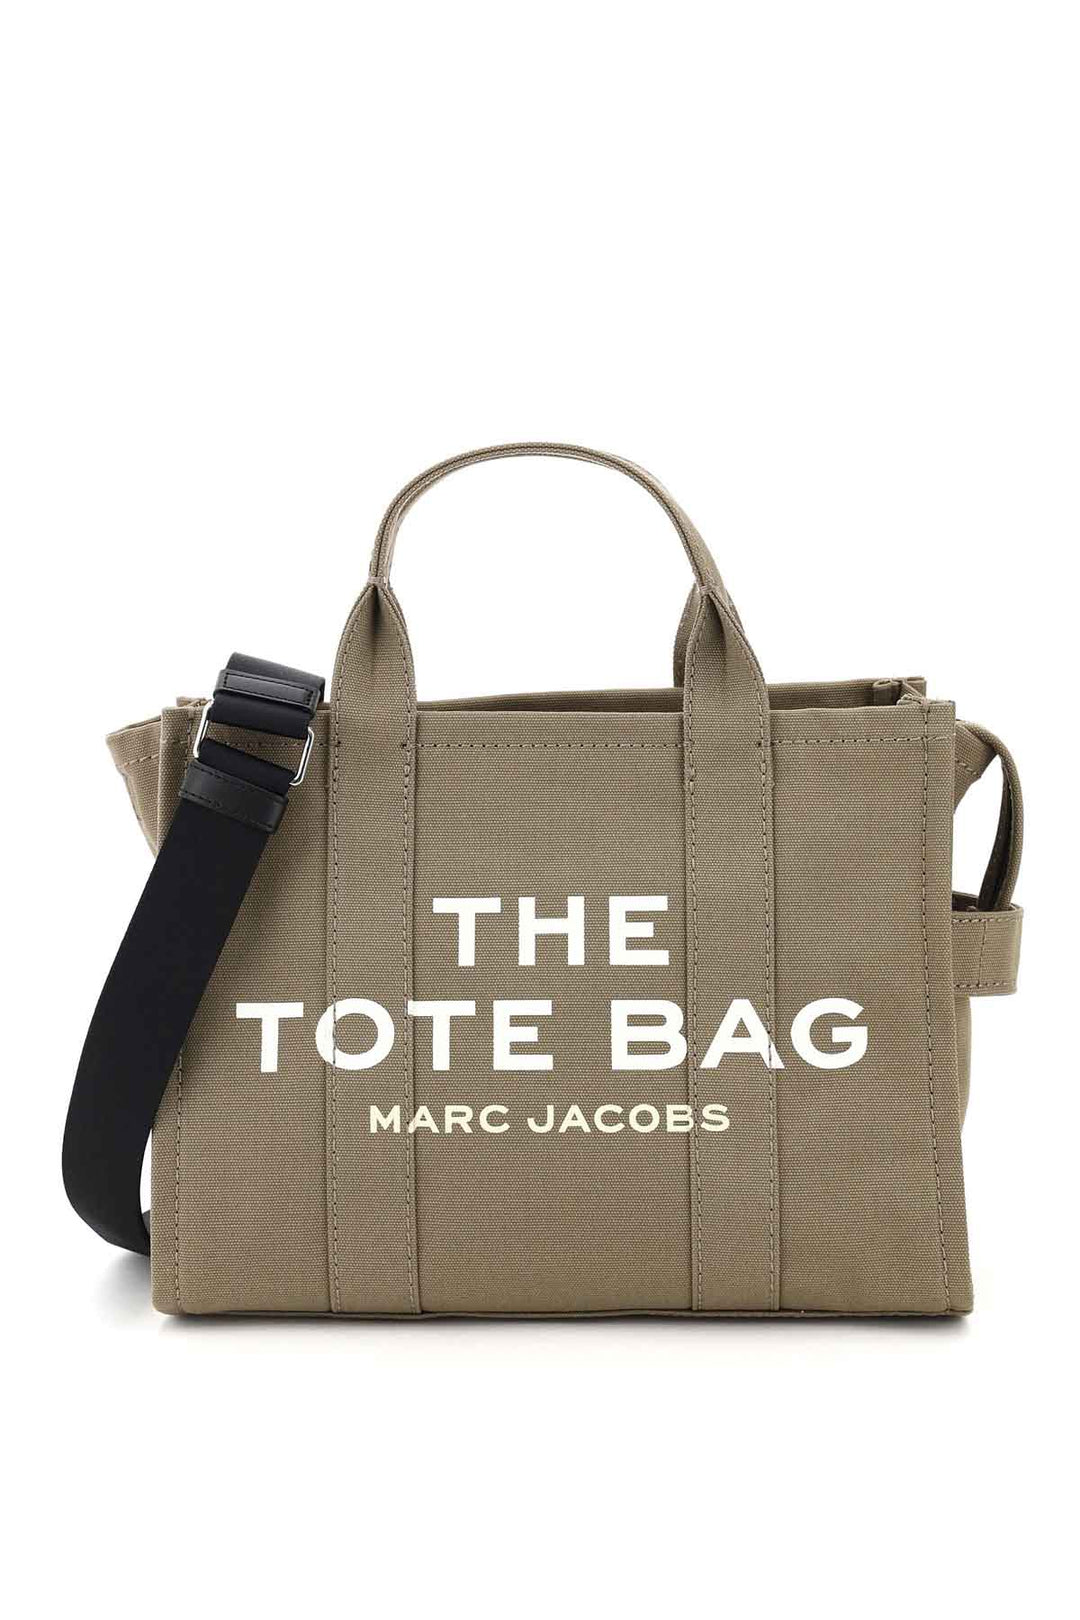 Borsa The Tote Bag Medium - Marc Jacobs - Donna